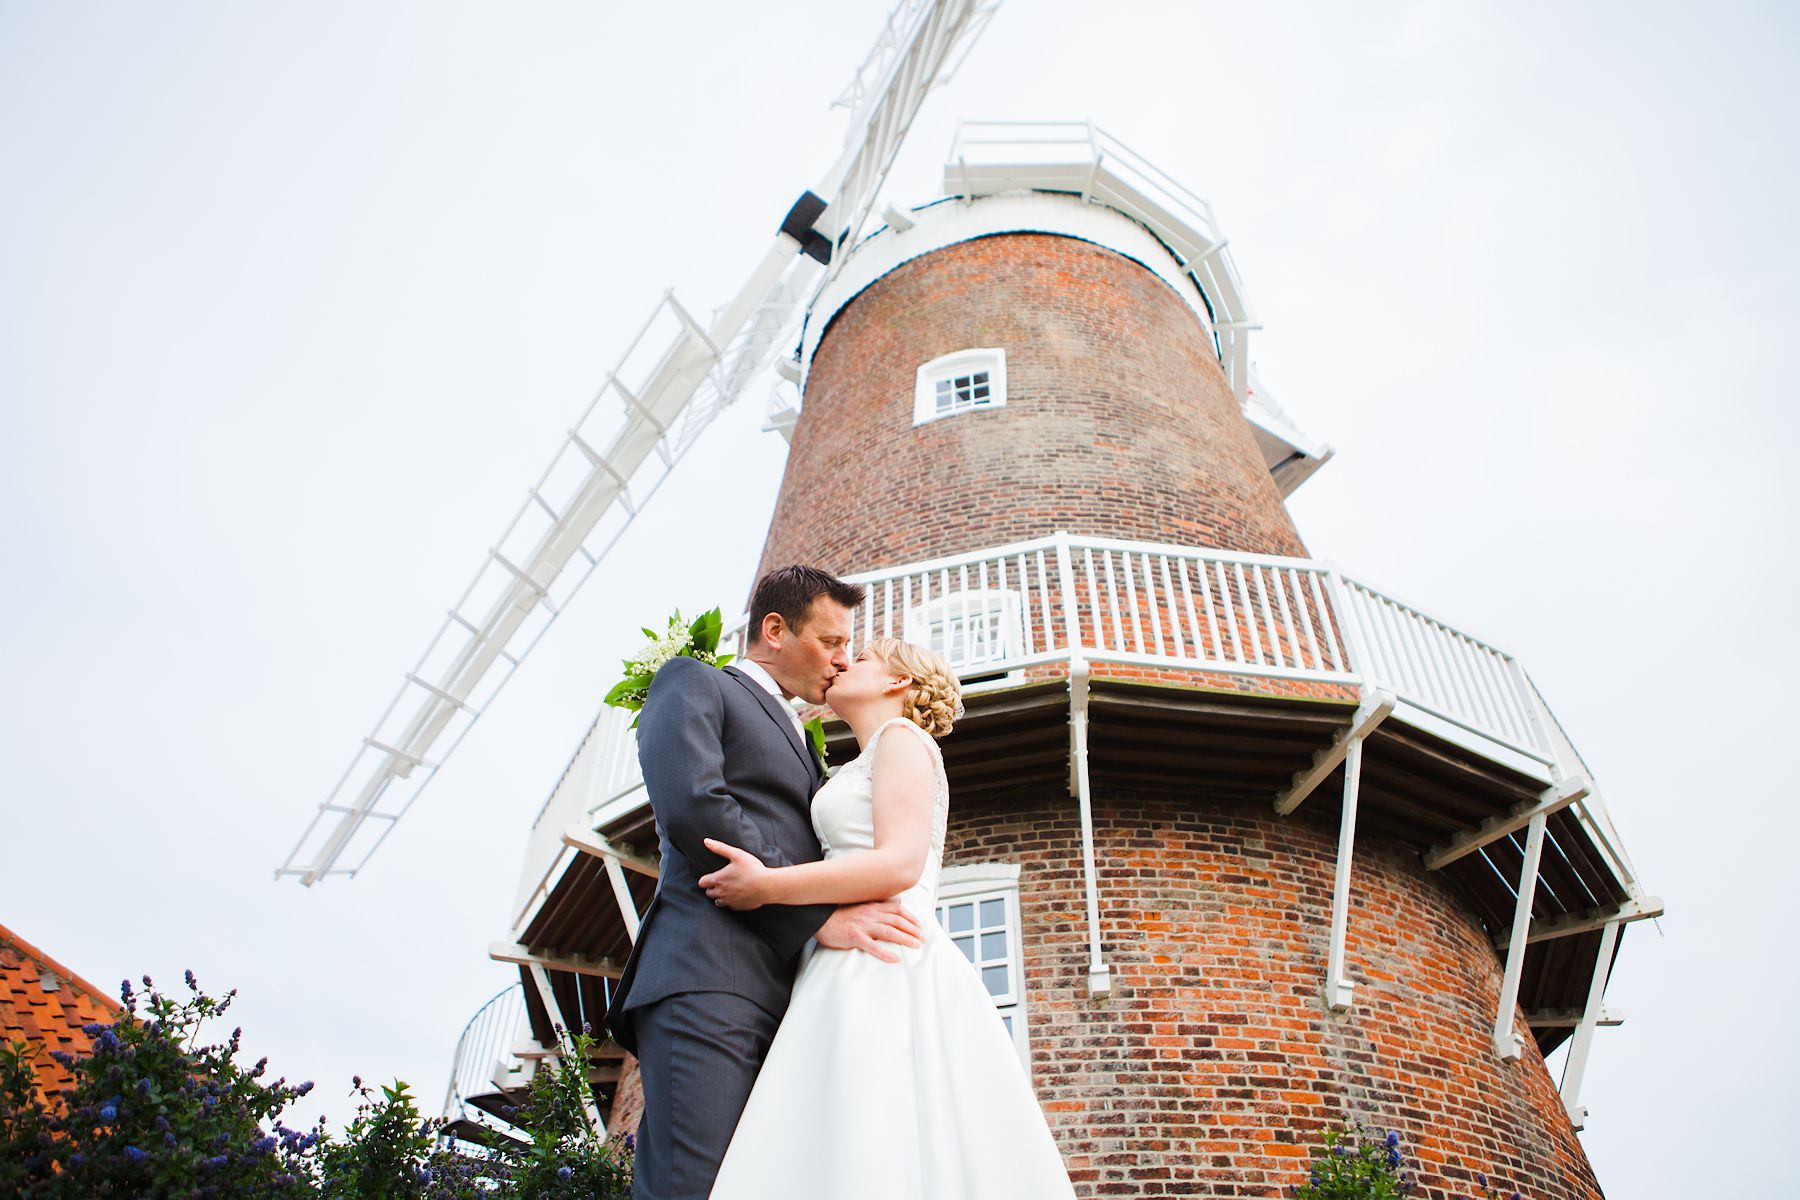 Cley windmill_North Norfolk, Norwich_wedding photography_small intimate wedding venues_windmill wedding_seaside wedding (22)